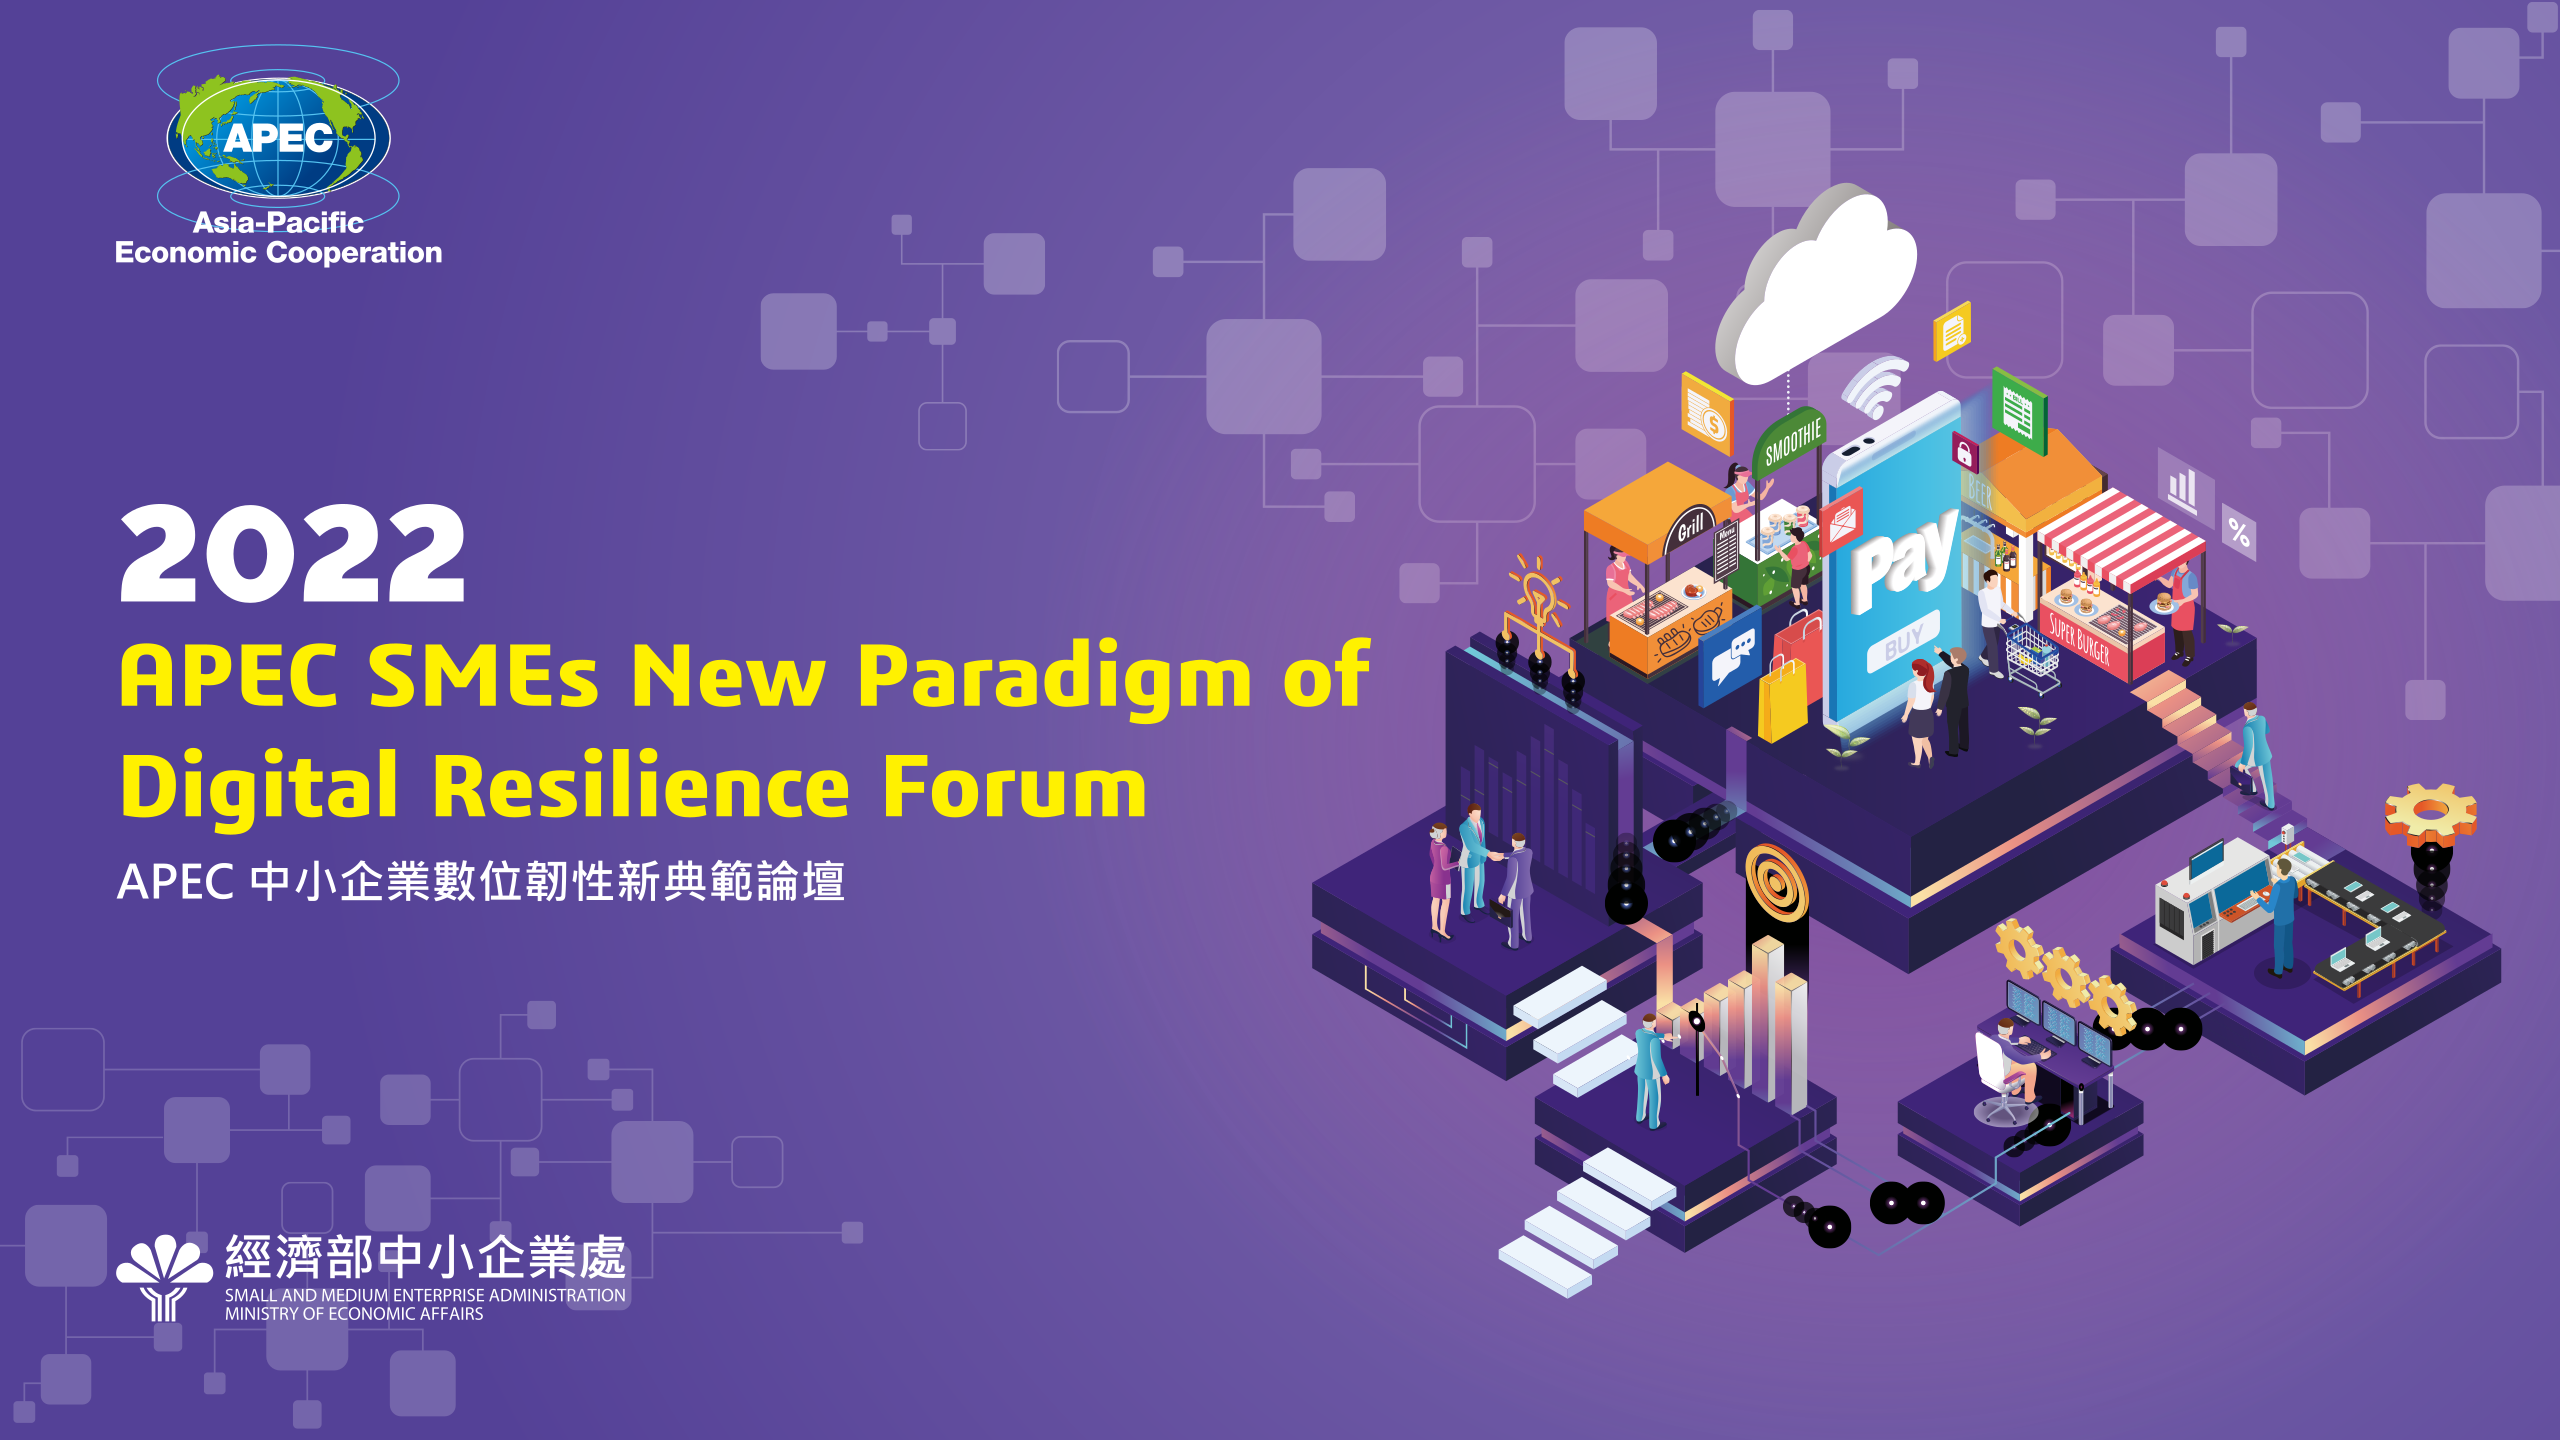 APEC SMEs New Paradigm